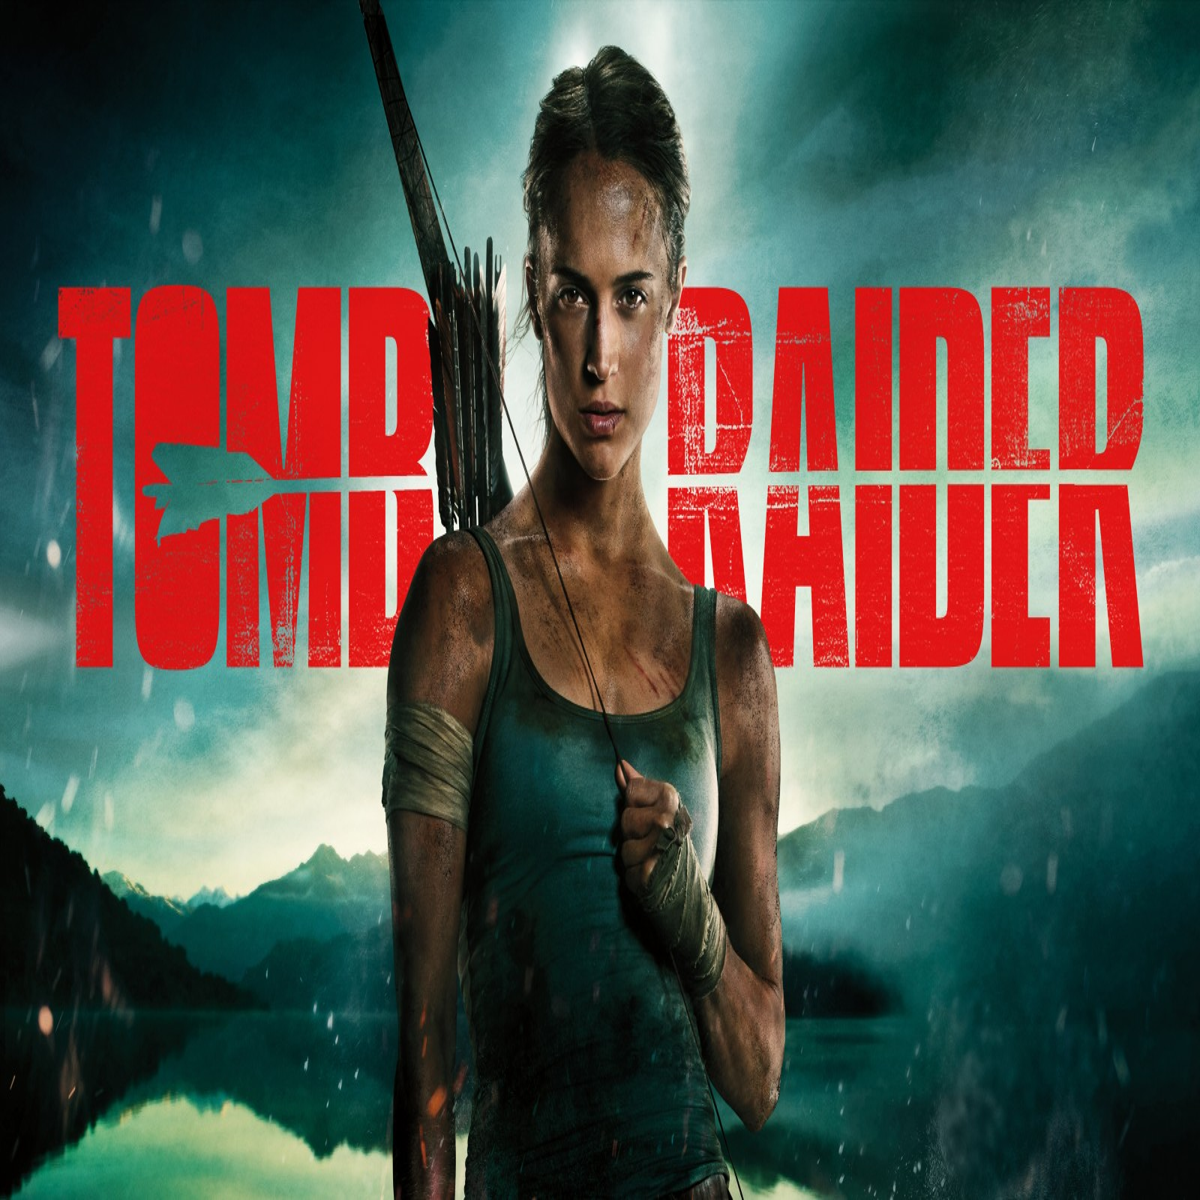 Tomb Raider: Alicia Vikander submetida ao simplismo